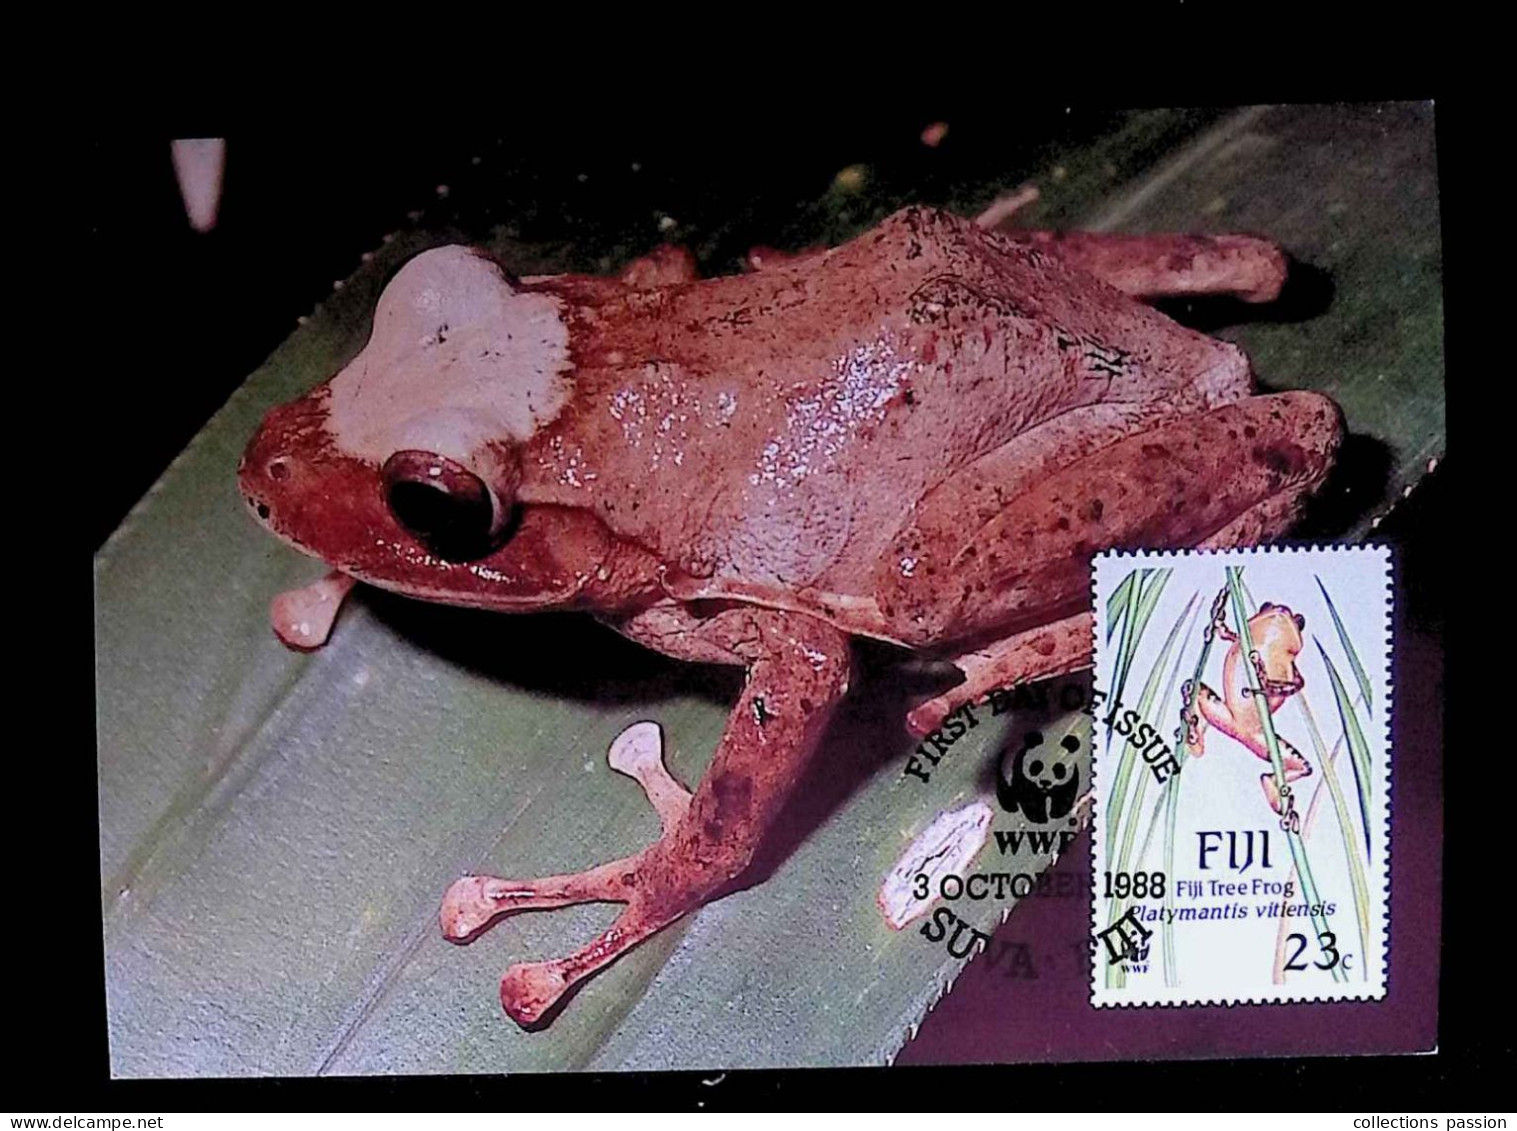 CL, FDC, Premier Jour, Fiji, Suva, 3 October 1988, WWF, Fiji Tree Frog - Fiji (1970-...)